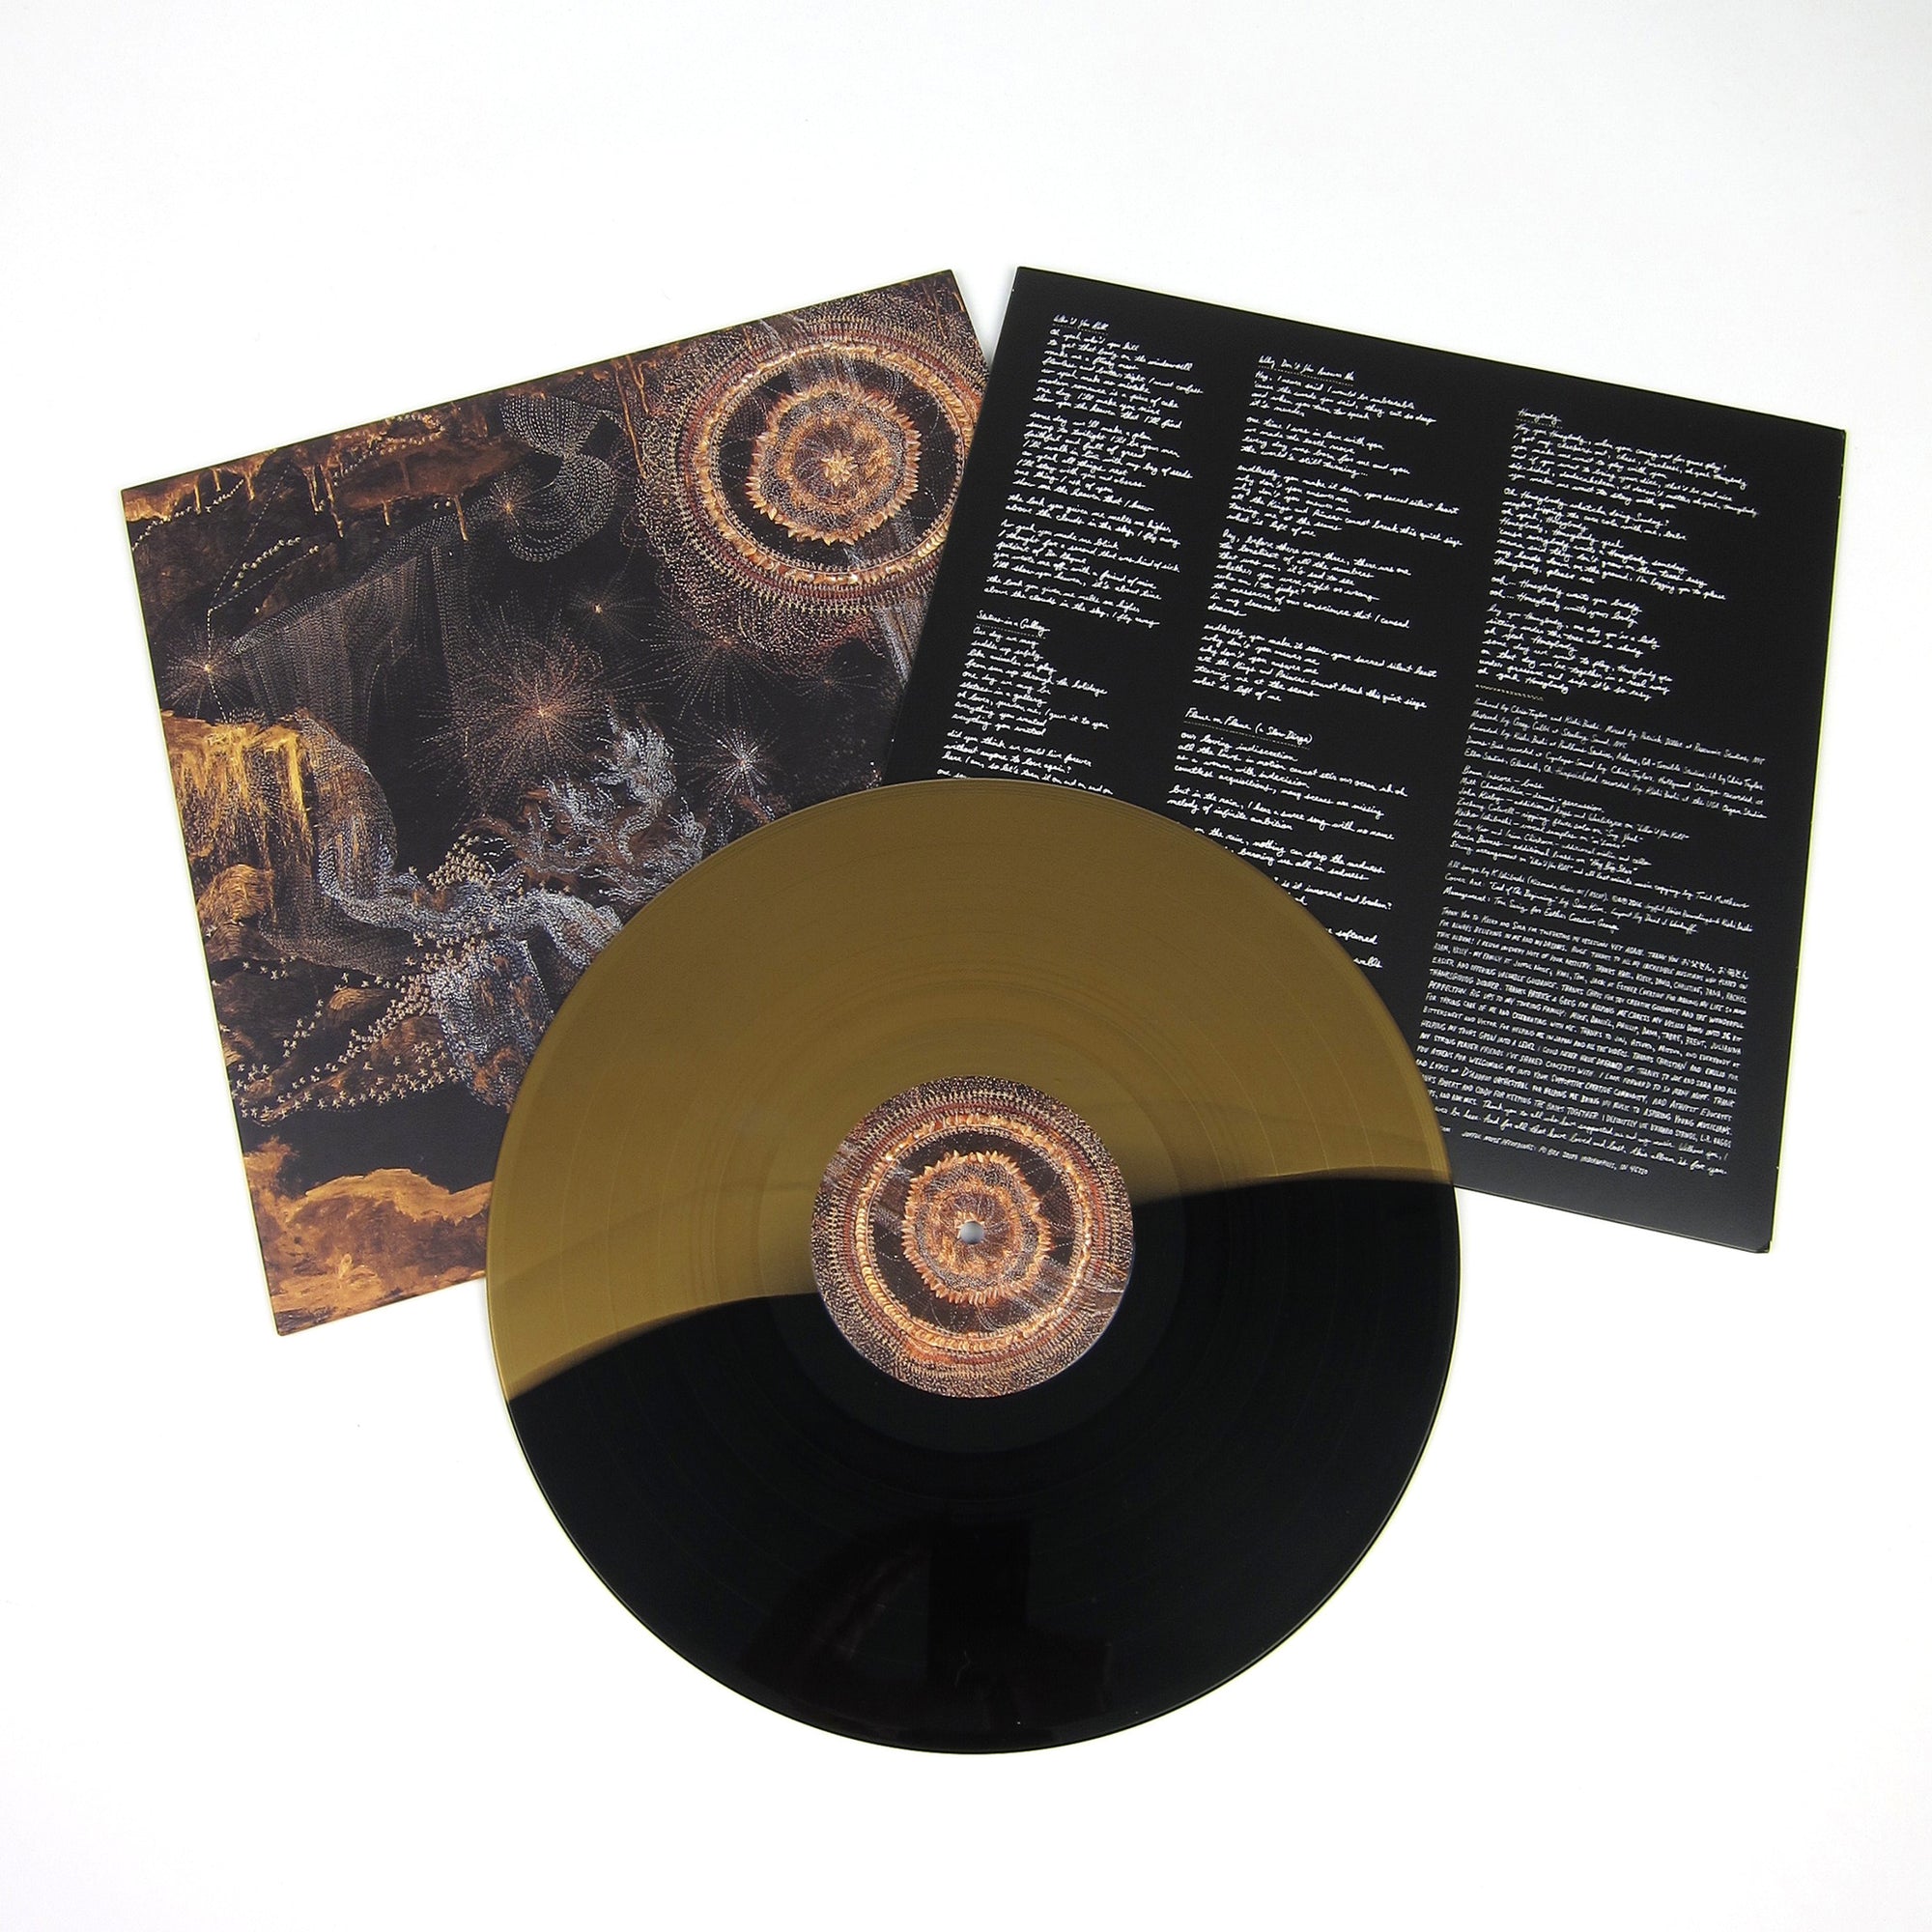 Kishi Bashi: Sonderlust (Indie Exclusive Gold / Black Vinyl) Vinyl LP ...